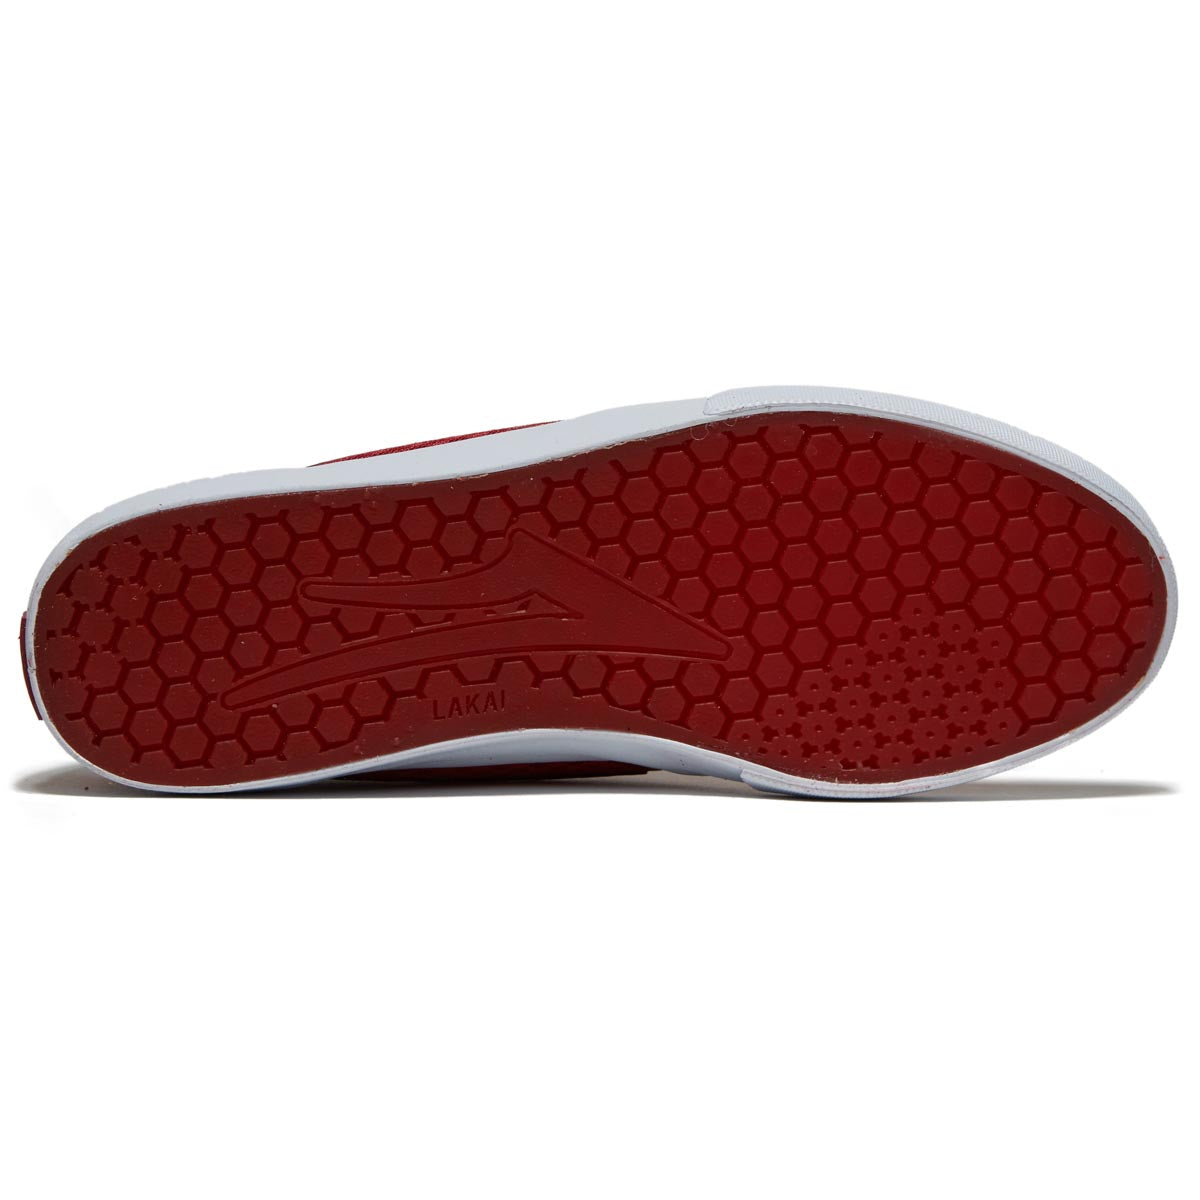 Lakai x Chocolate Atlantic Vulc Shoes - Red Suede image 4